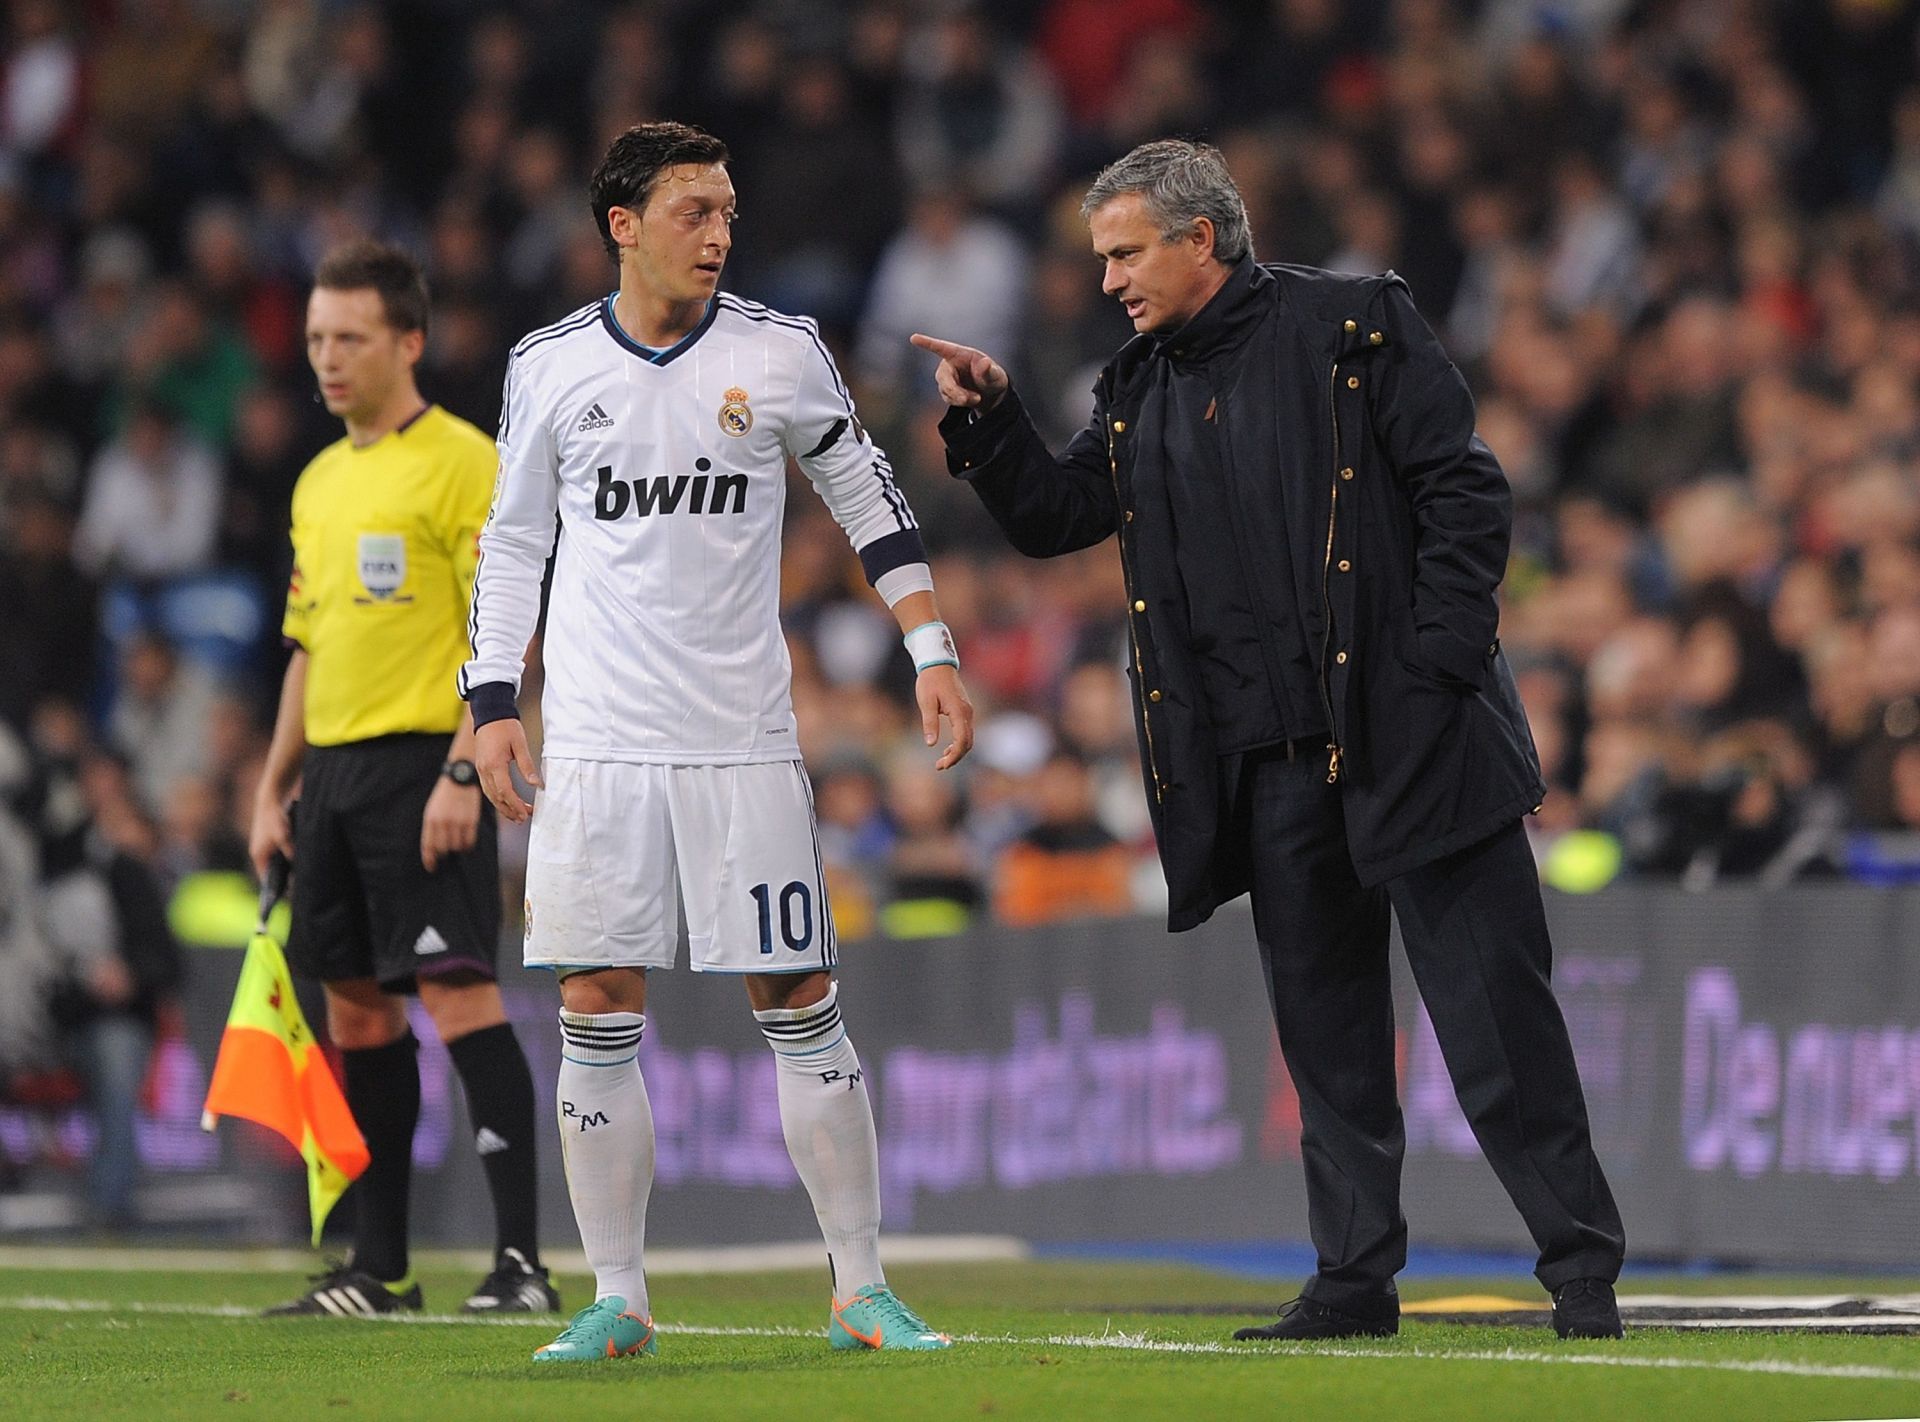 Mesut Ozil was an amazing assist-provider under Jose Mourinho